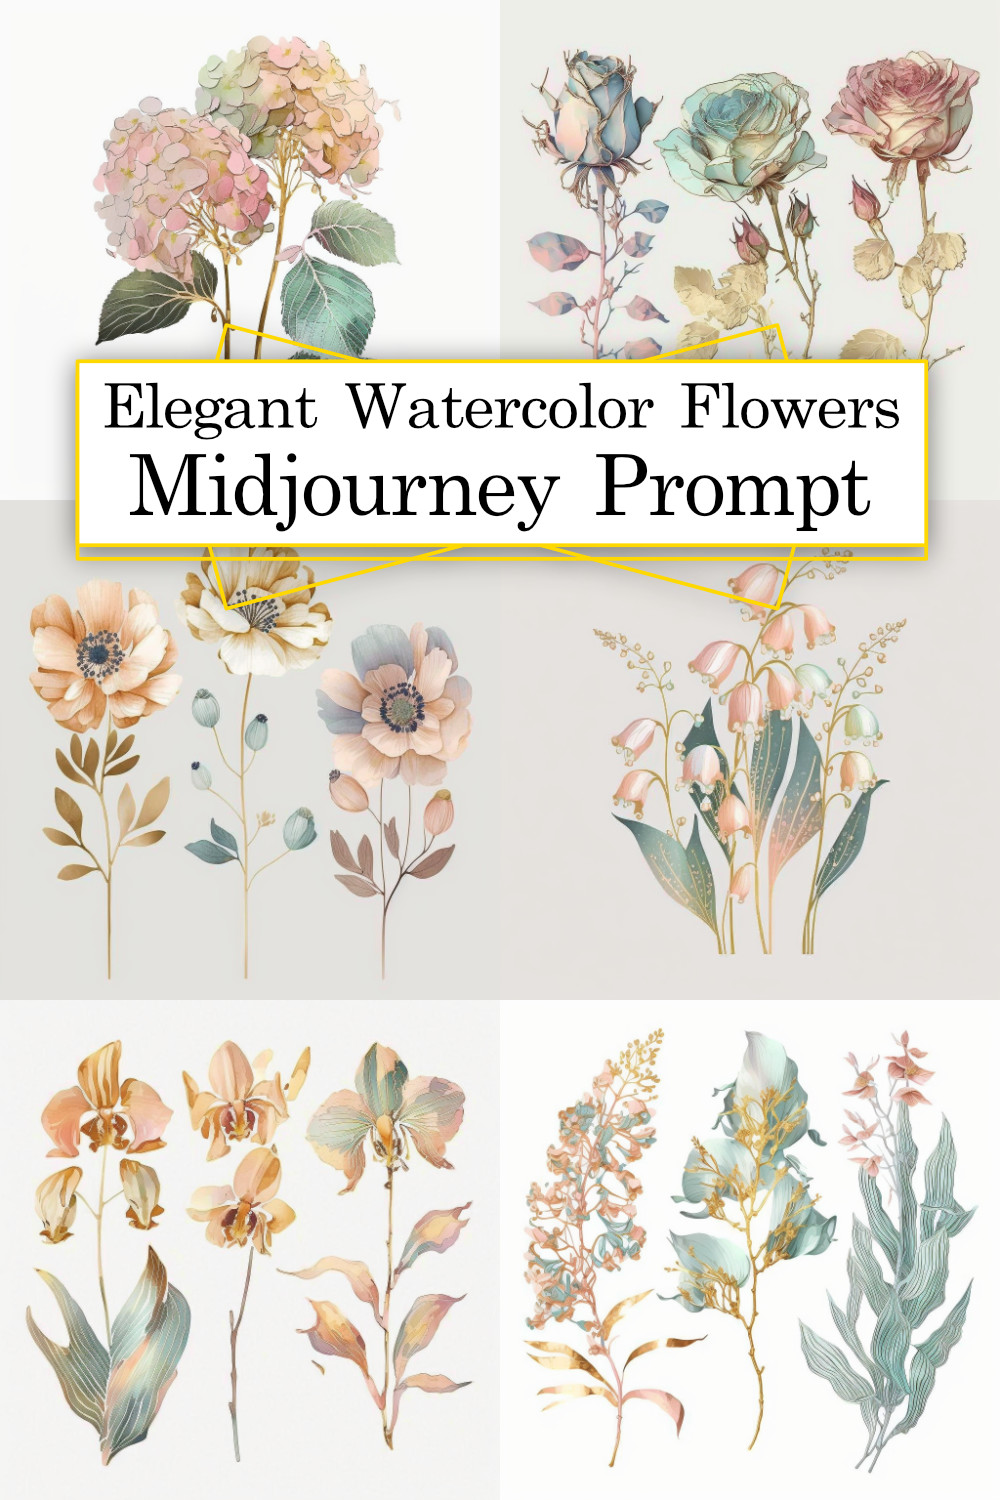 Elegant Watercolor Flowers Midjourney Prompt pinterest preview image.